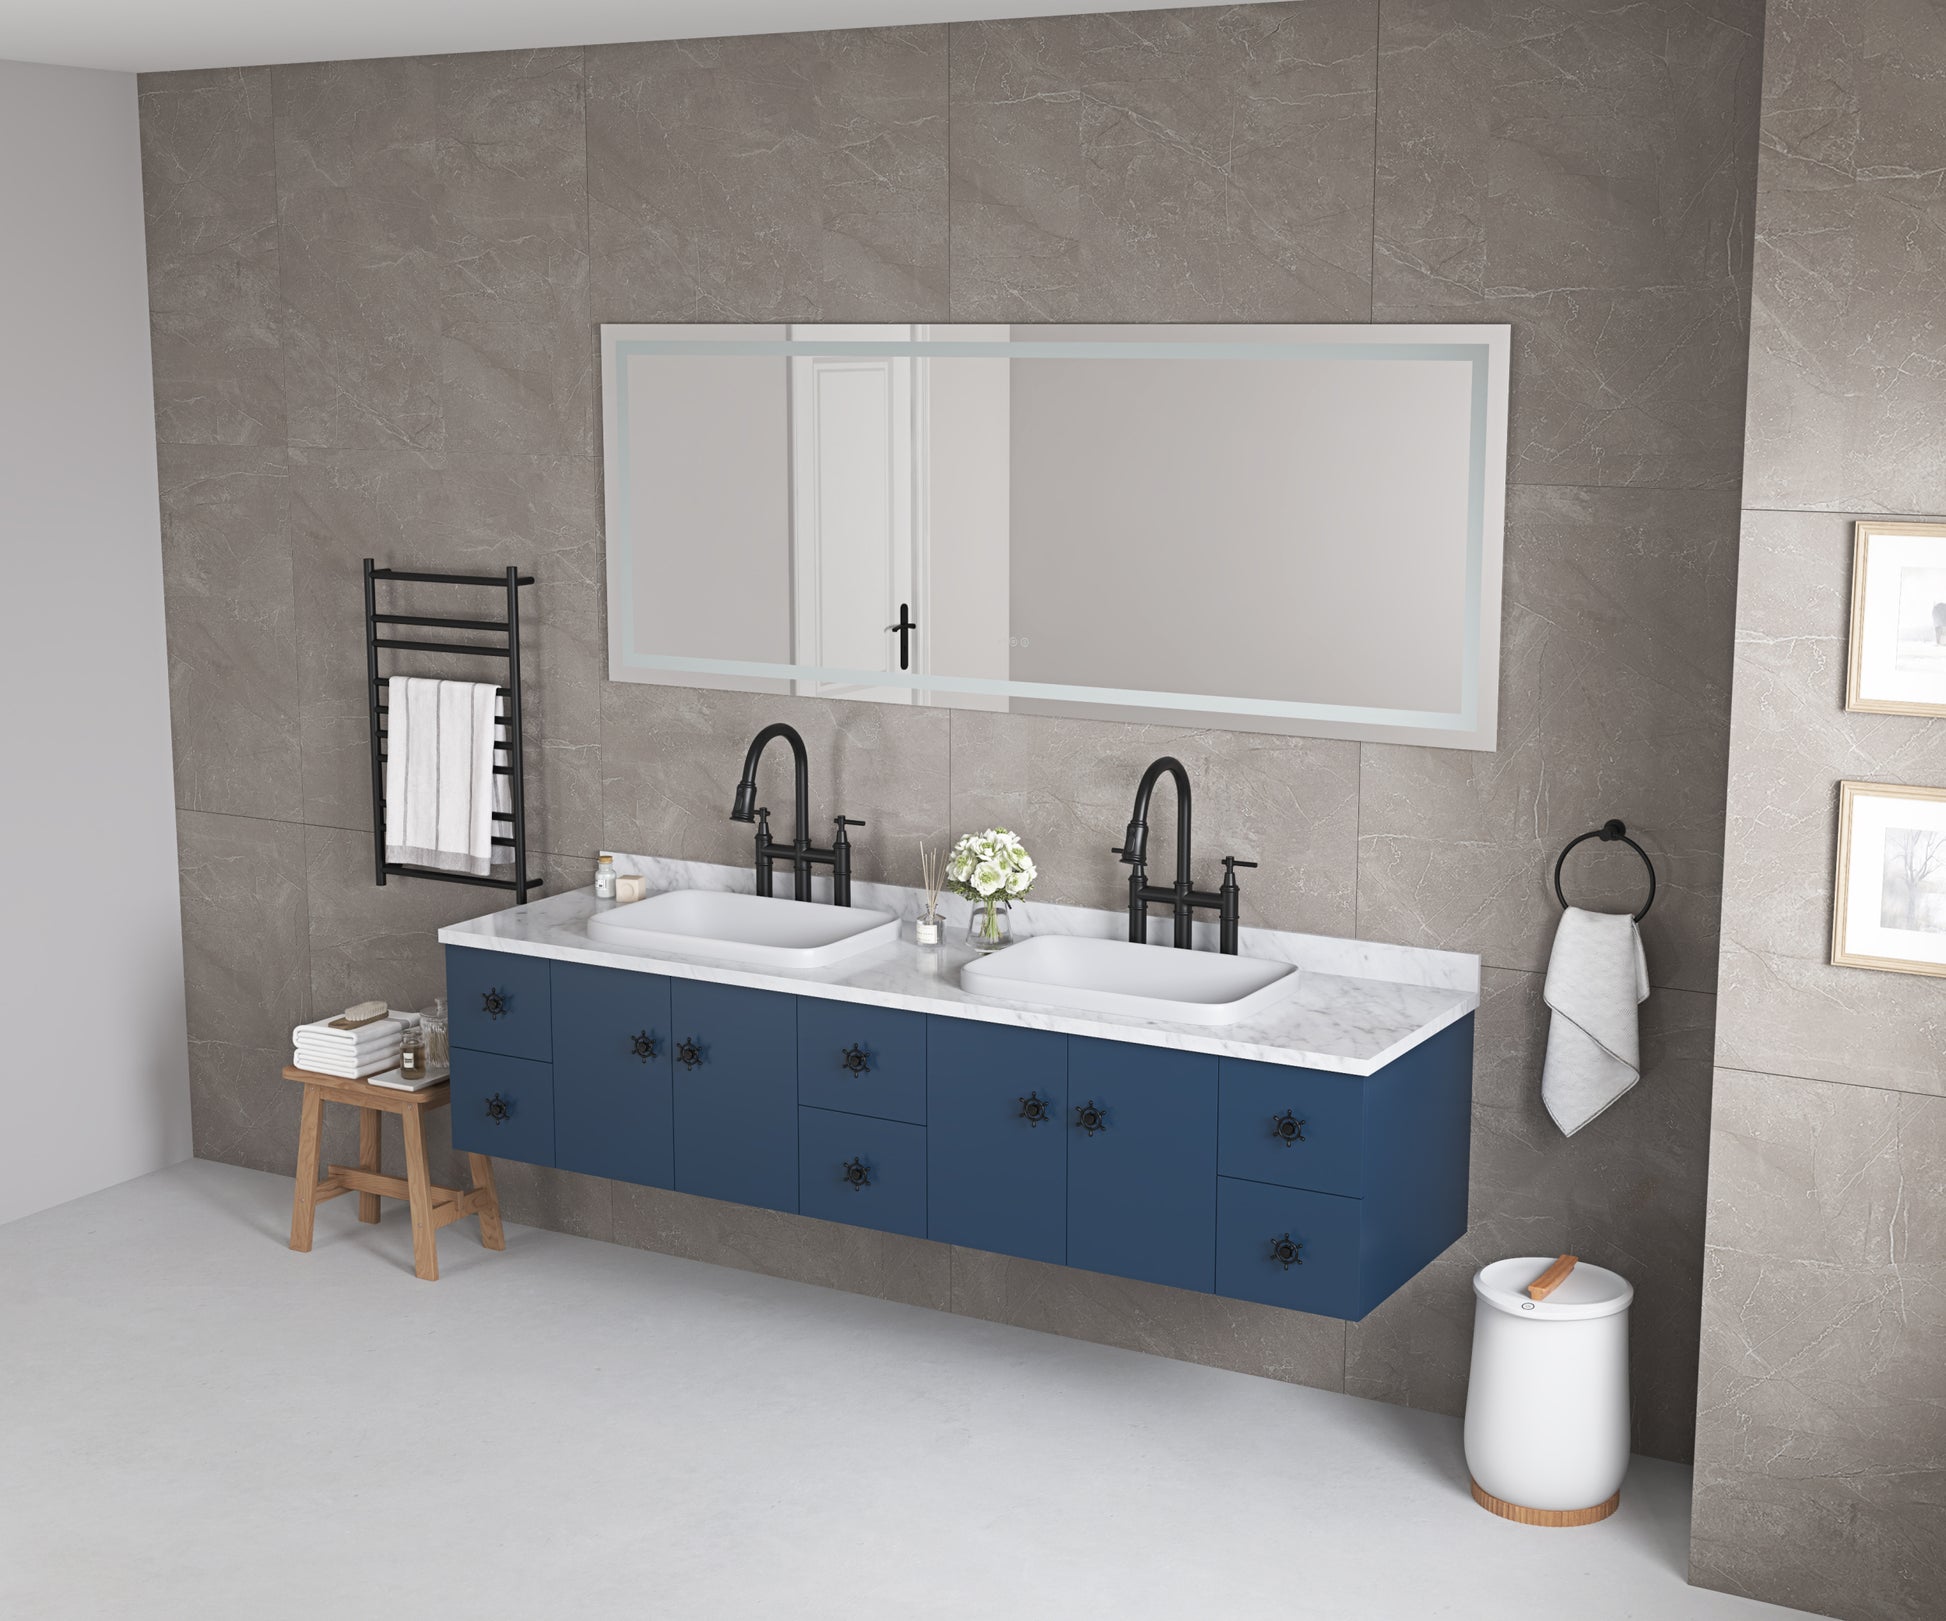 72*32 bathroom led mirror is multi functional and each white-aluminium